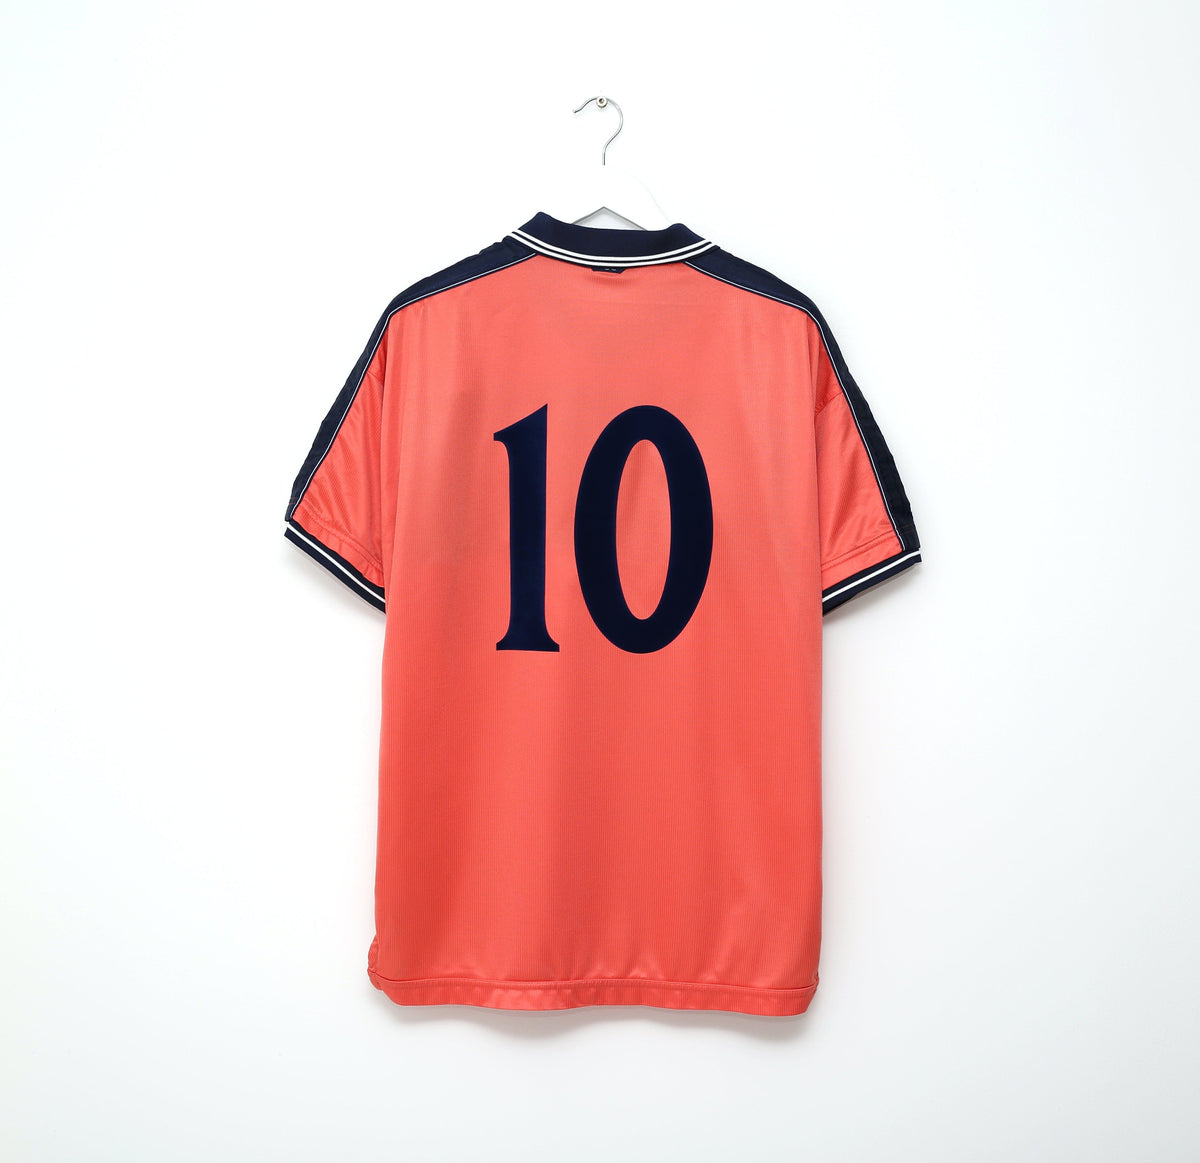 Football shirts size guide - Football Shirt Collective